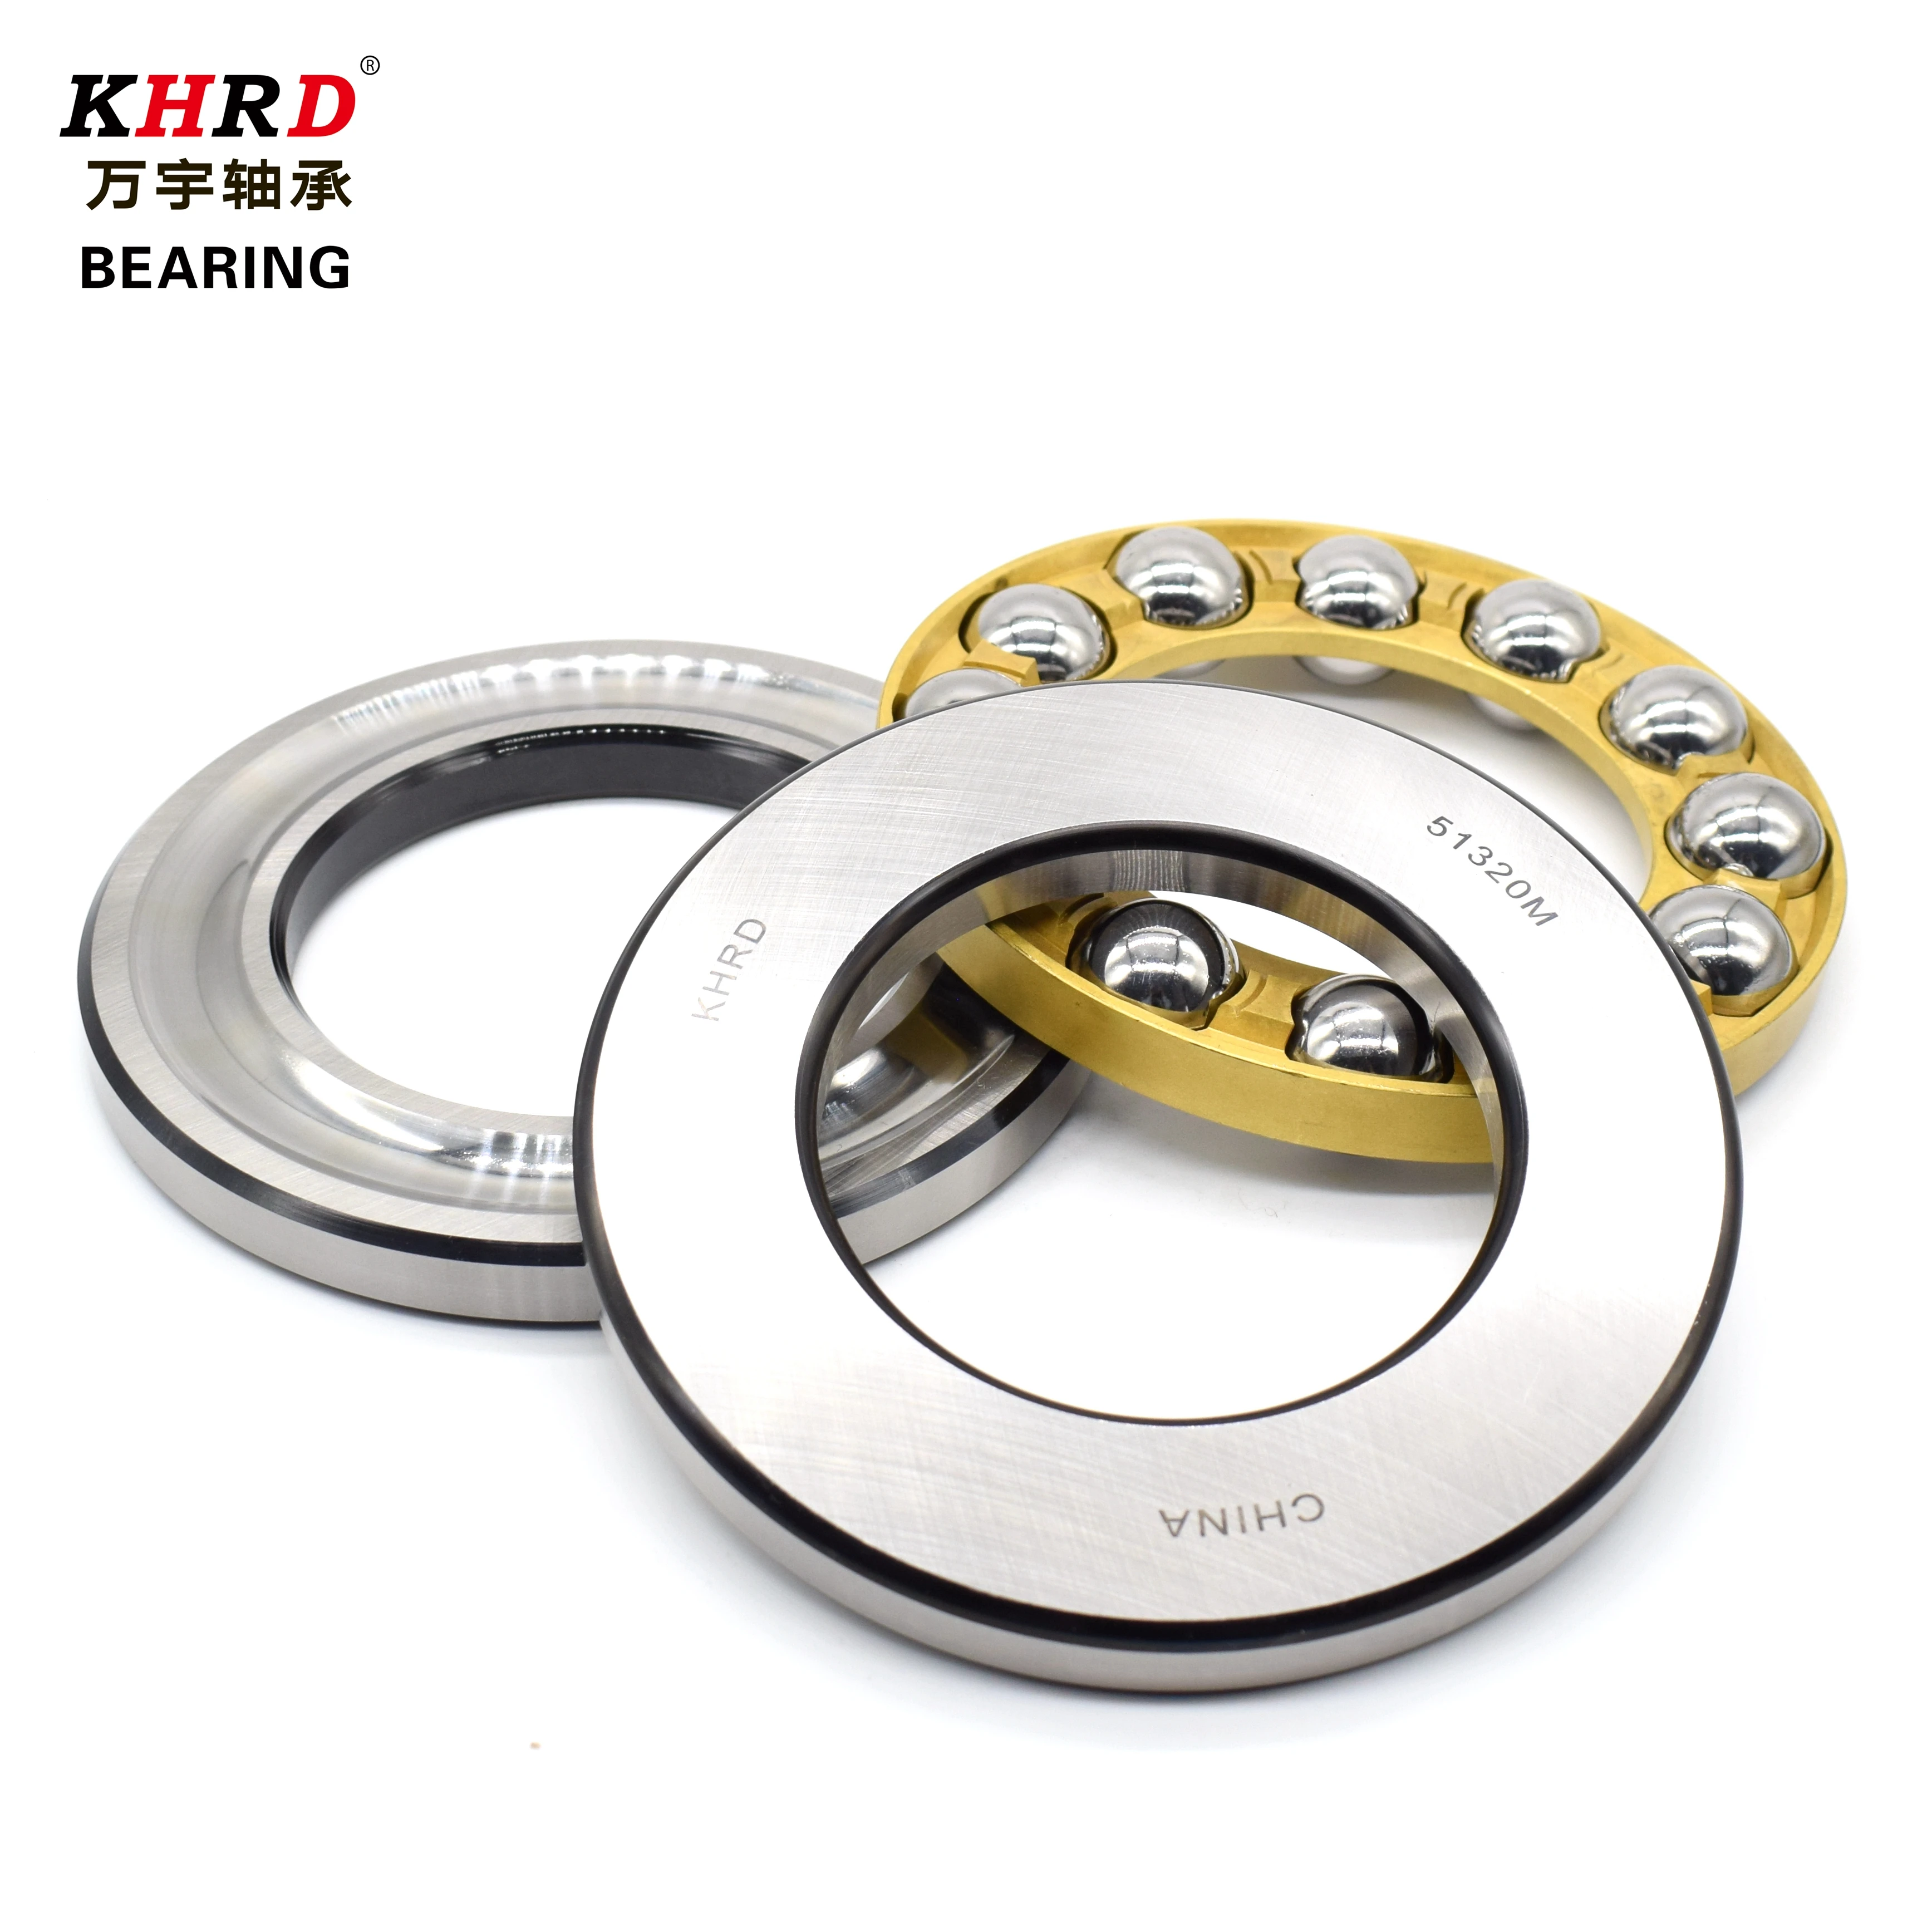 KHRD brand thrust ball bearing china bearings 51101 51102 51103